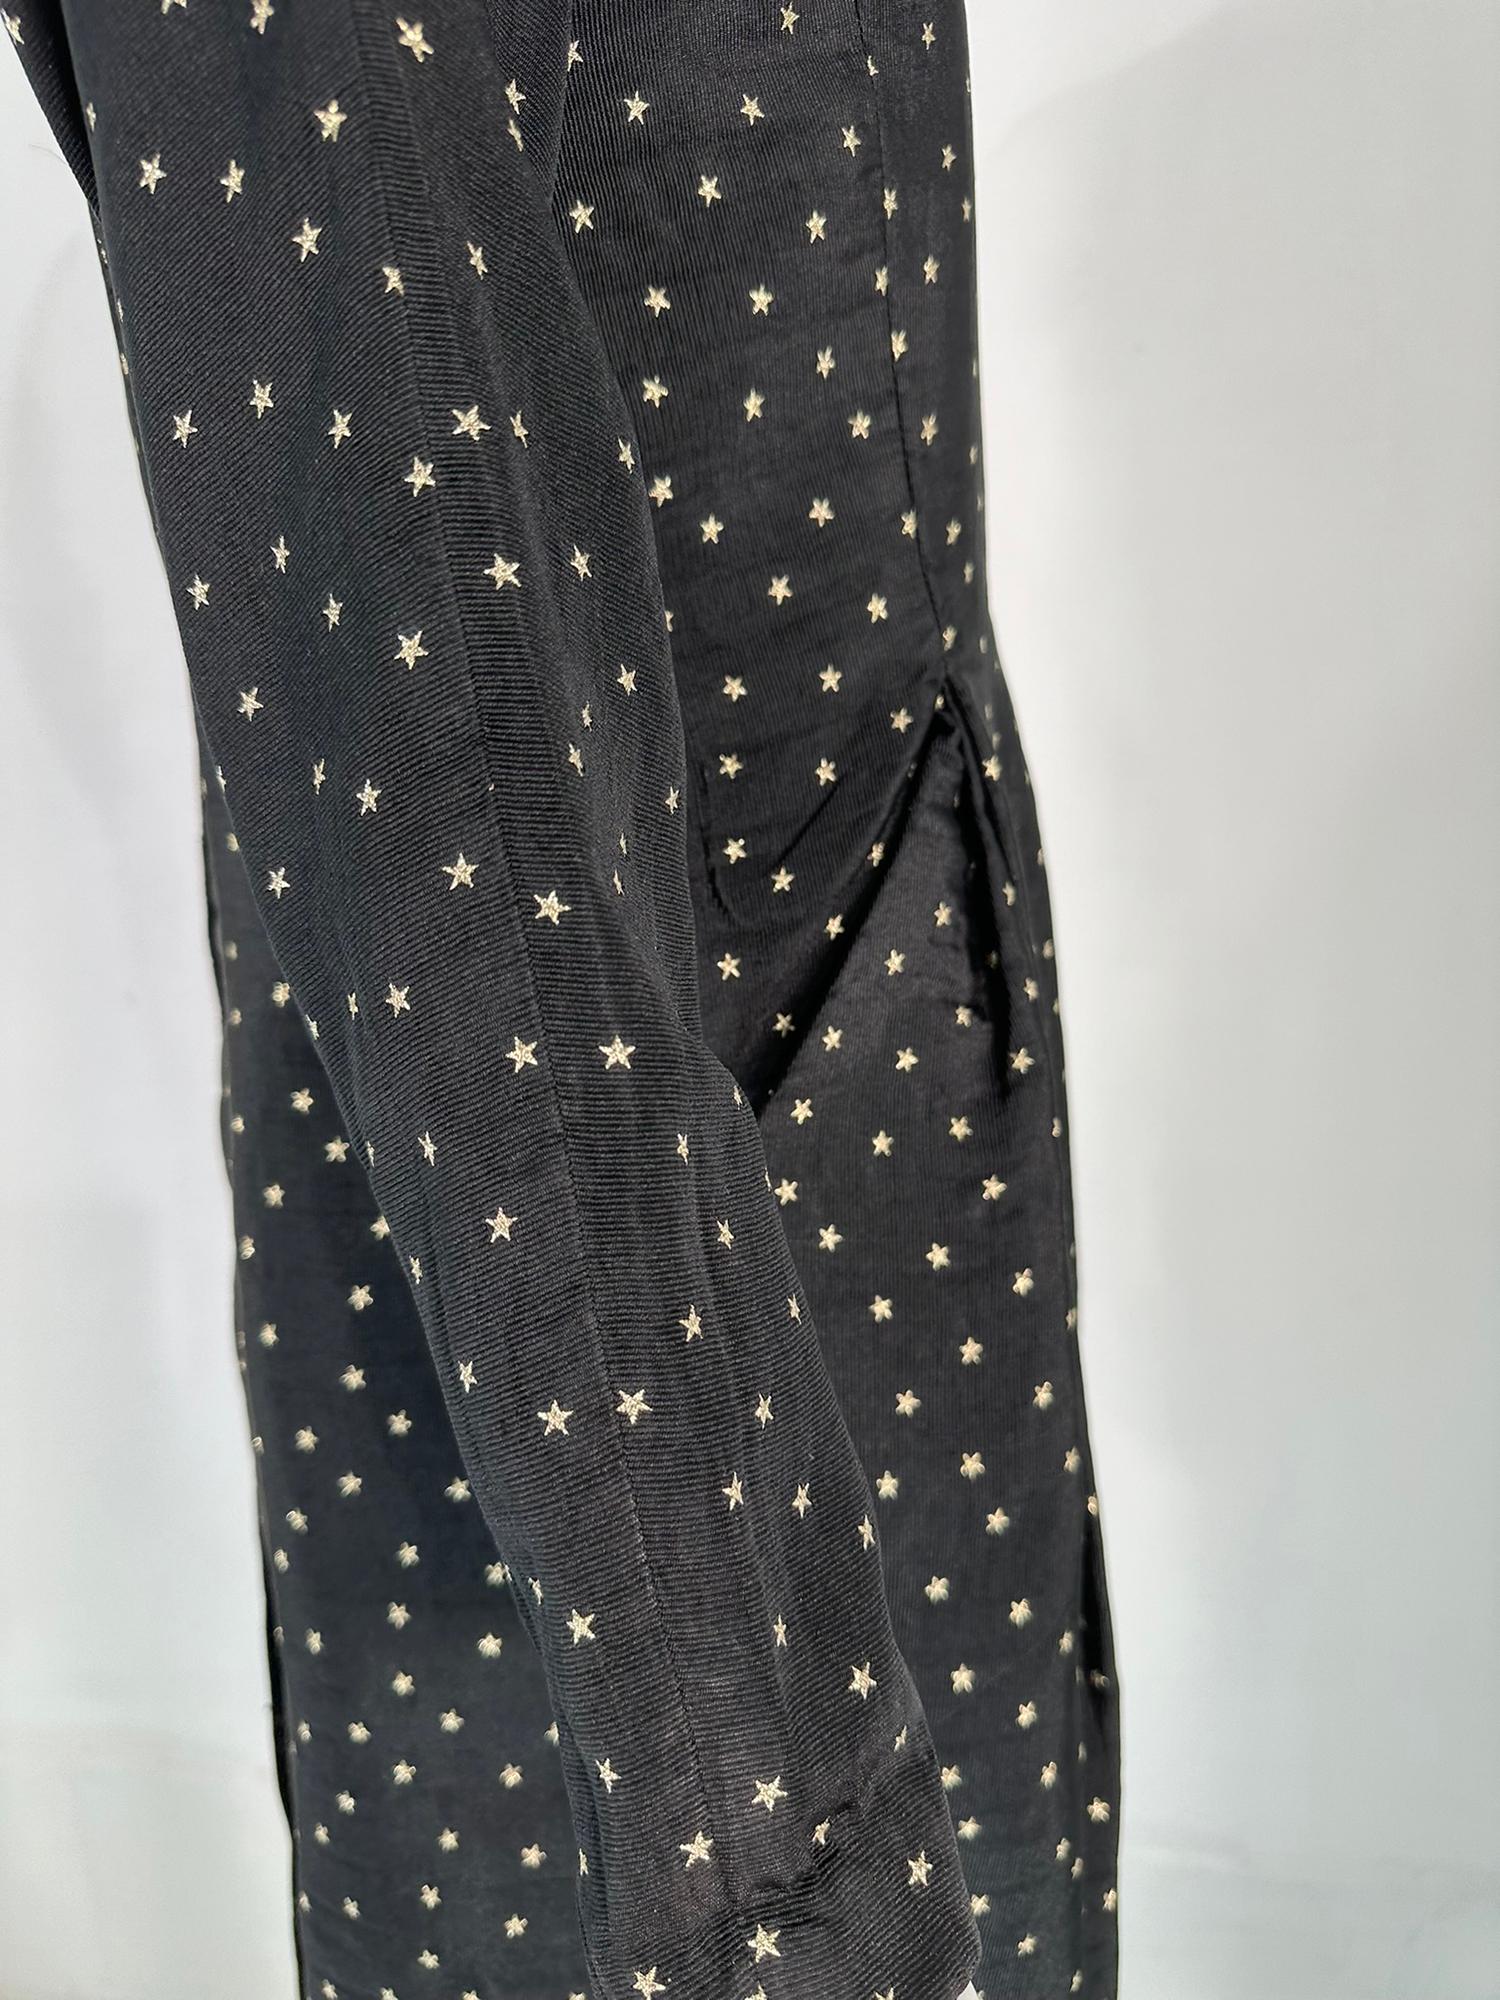 Geoffrey Beene Gold Stars on Black Faille Button Back Dress 1980s 9